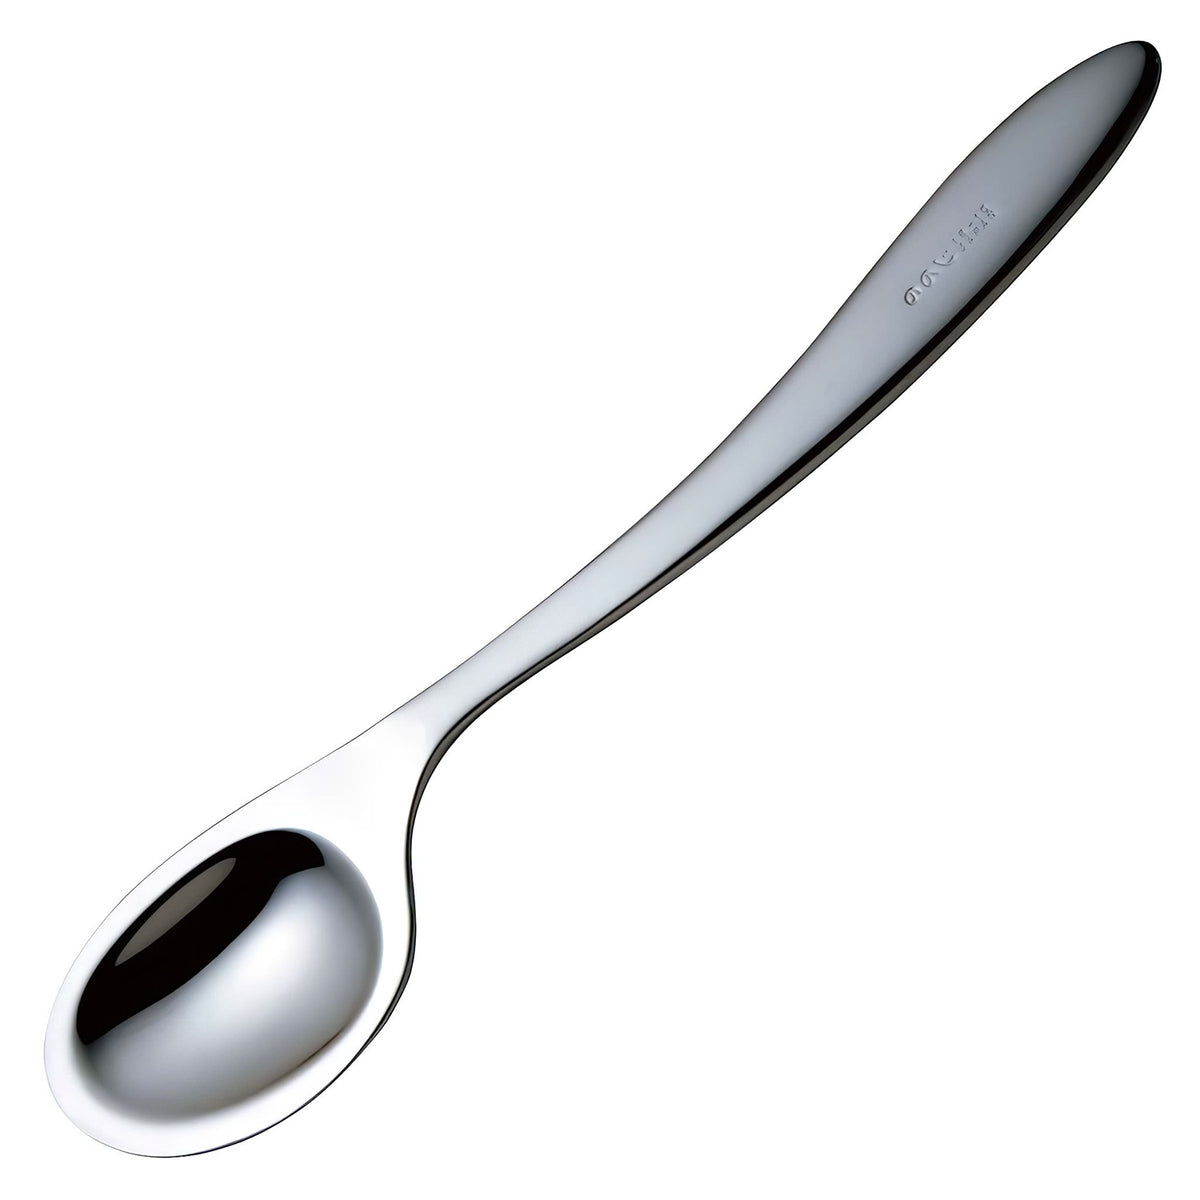 Nonoji UD Stainless Steel Soft Spoon